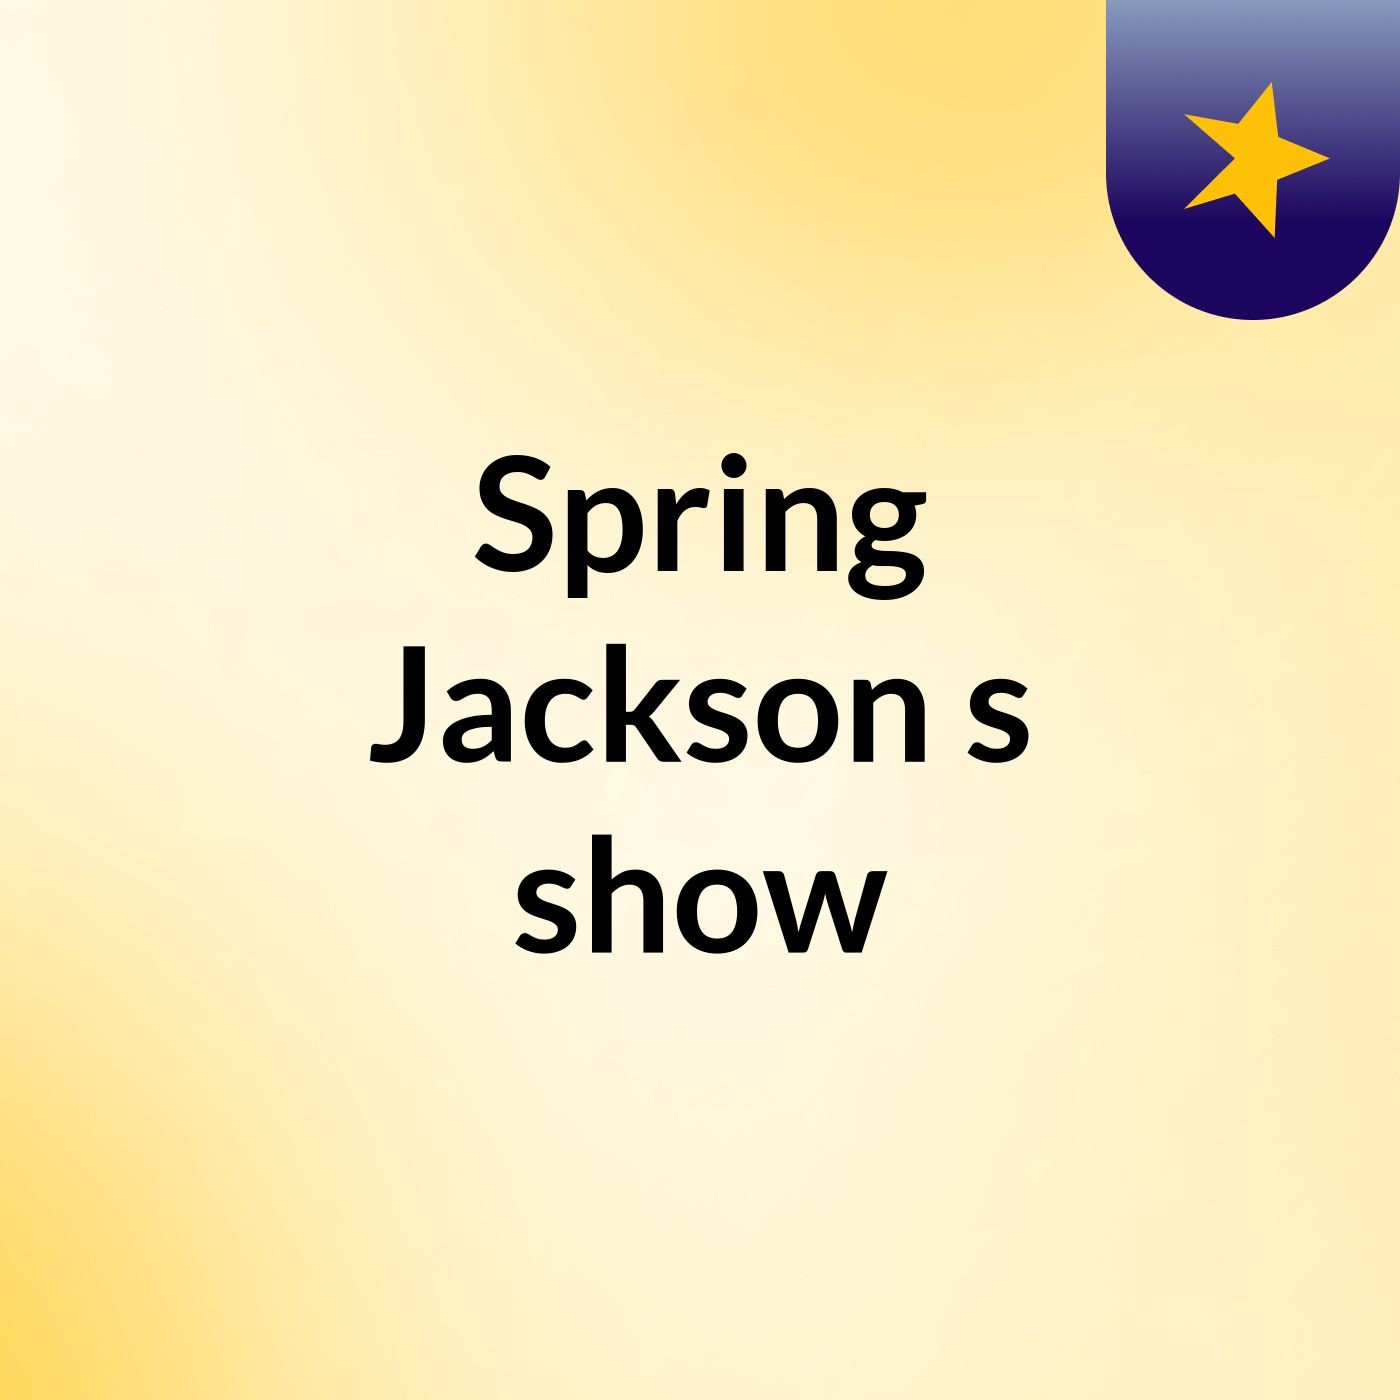 Episode 3 - Spring Jackson's show